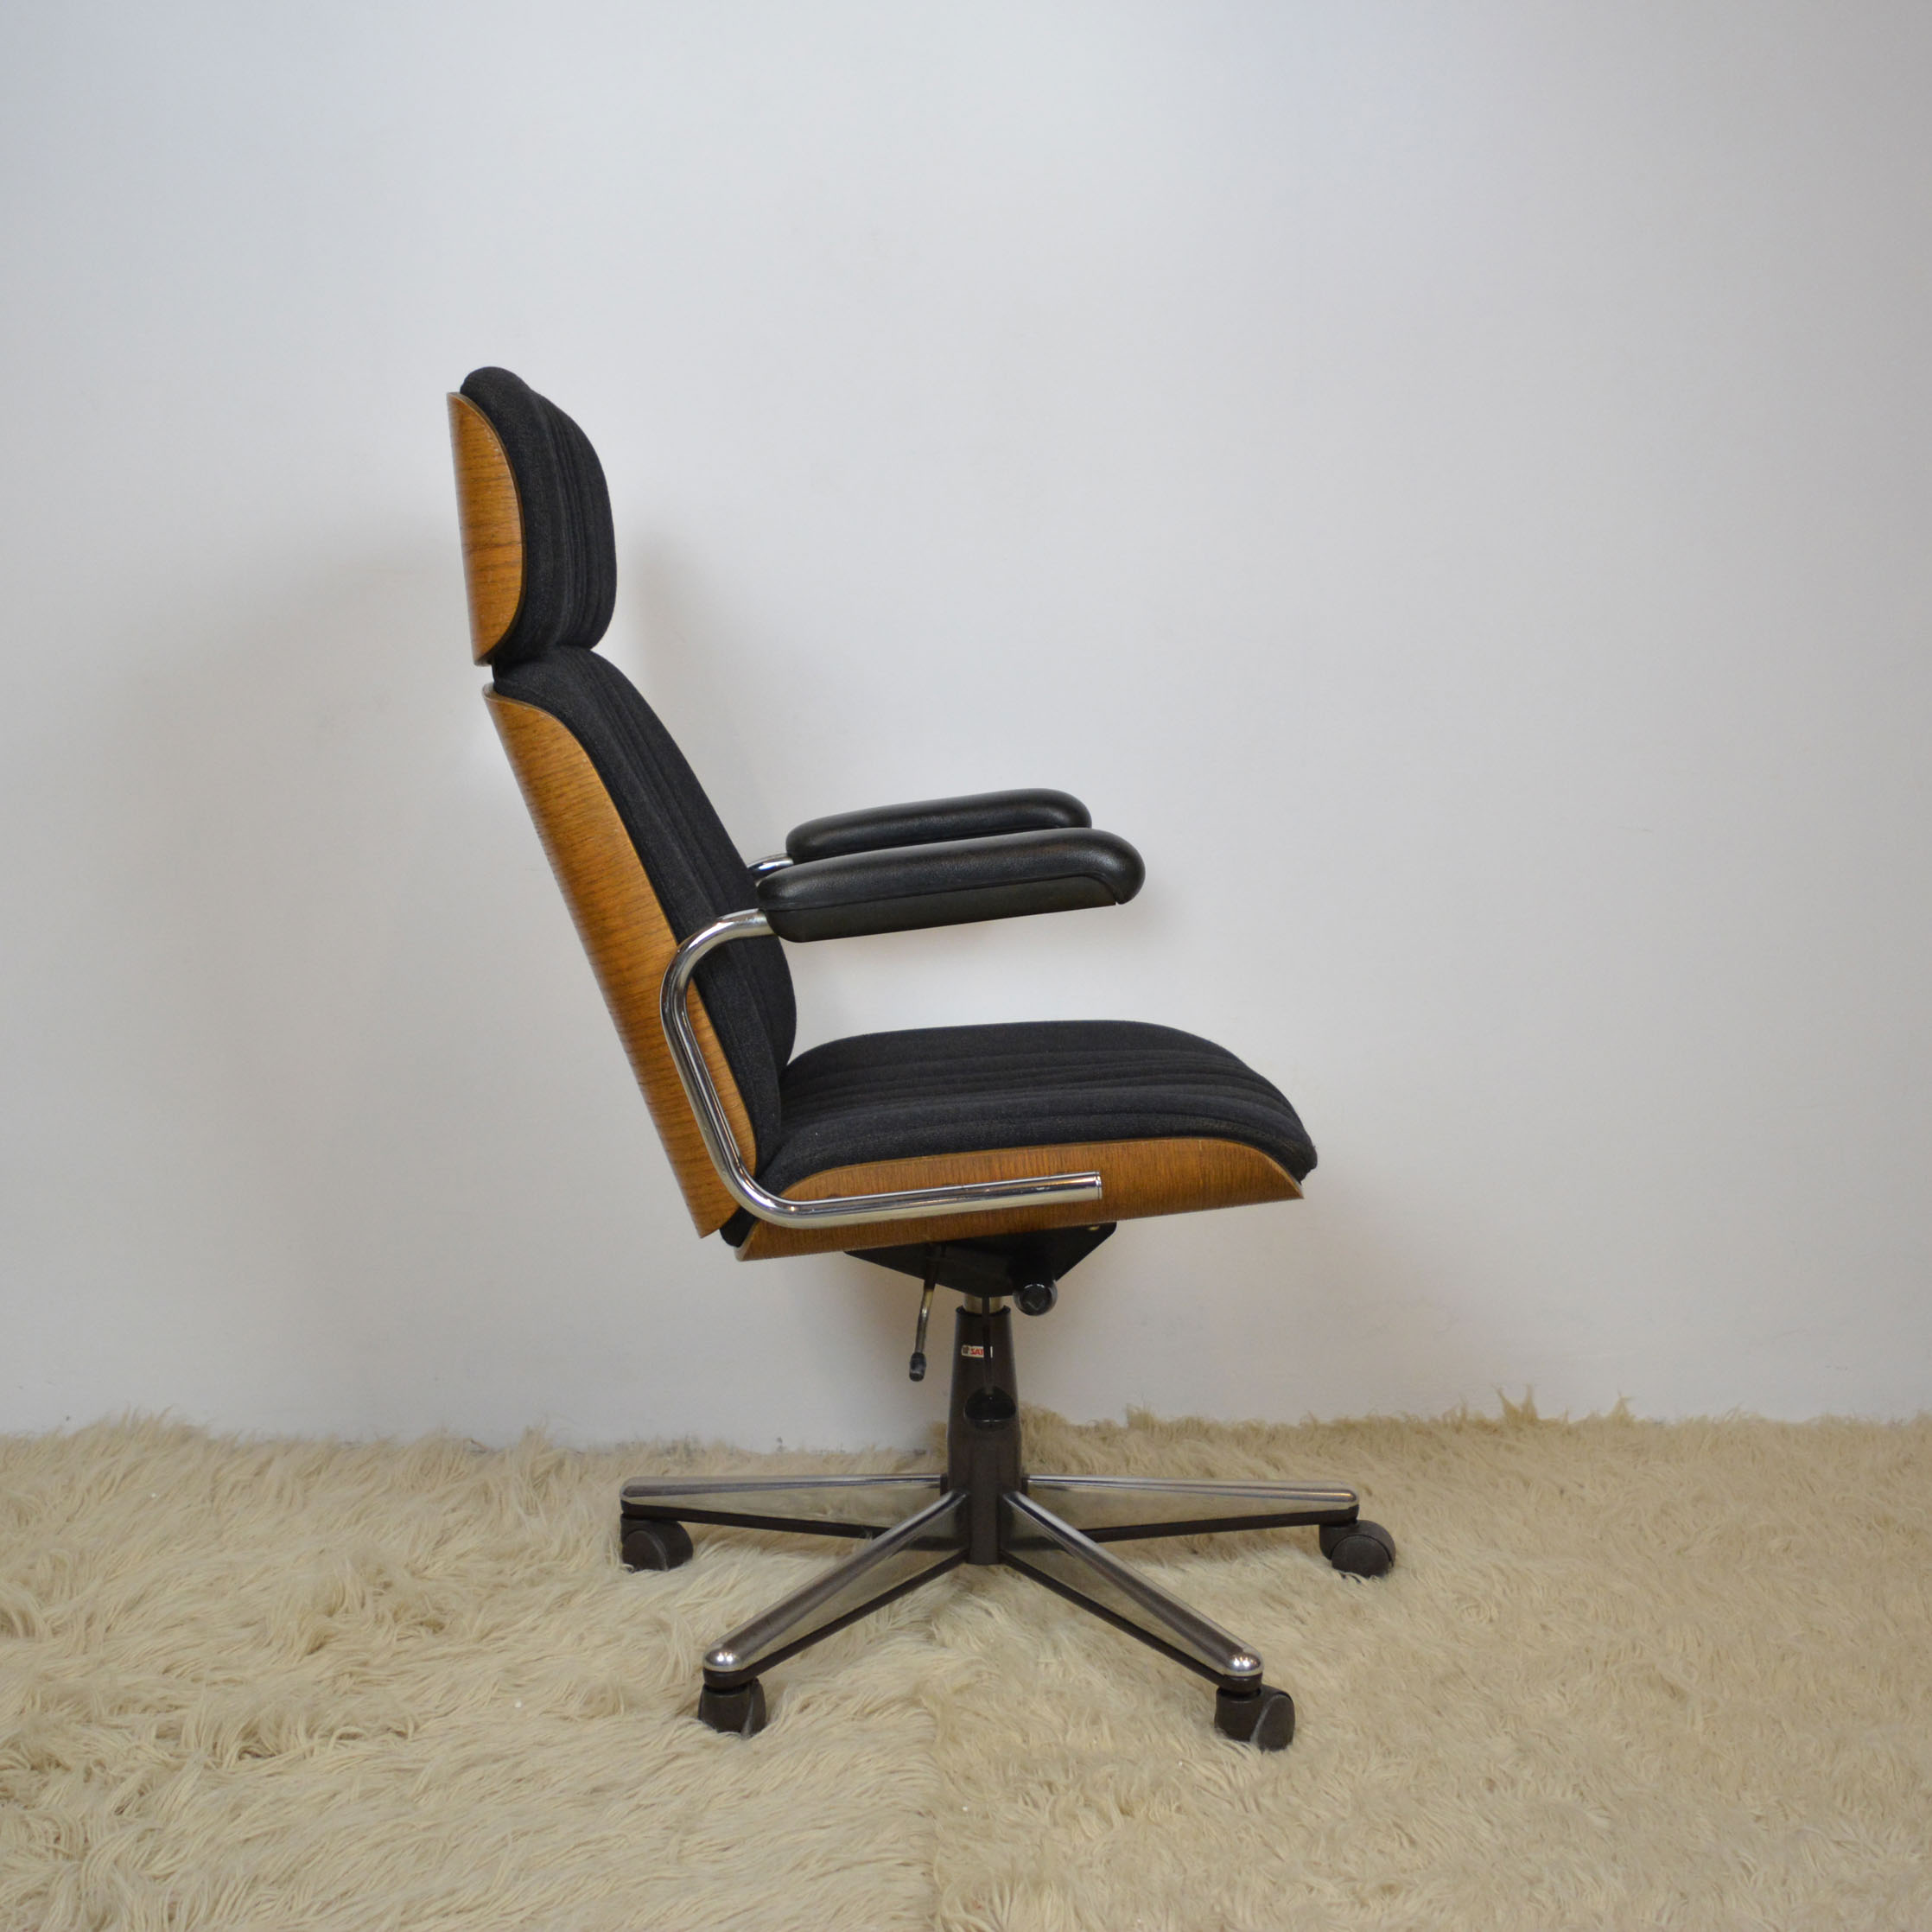 Late 70's SATO Desk Chair -Rent Only- MODERNON - A Retrosexual Movement